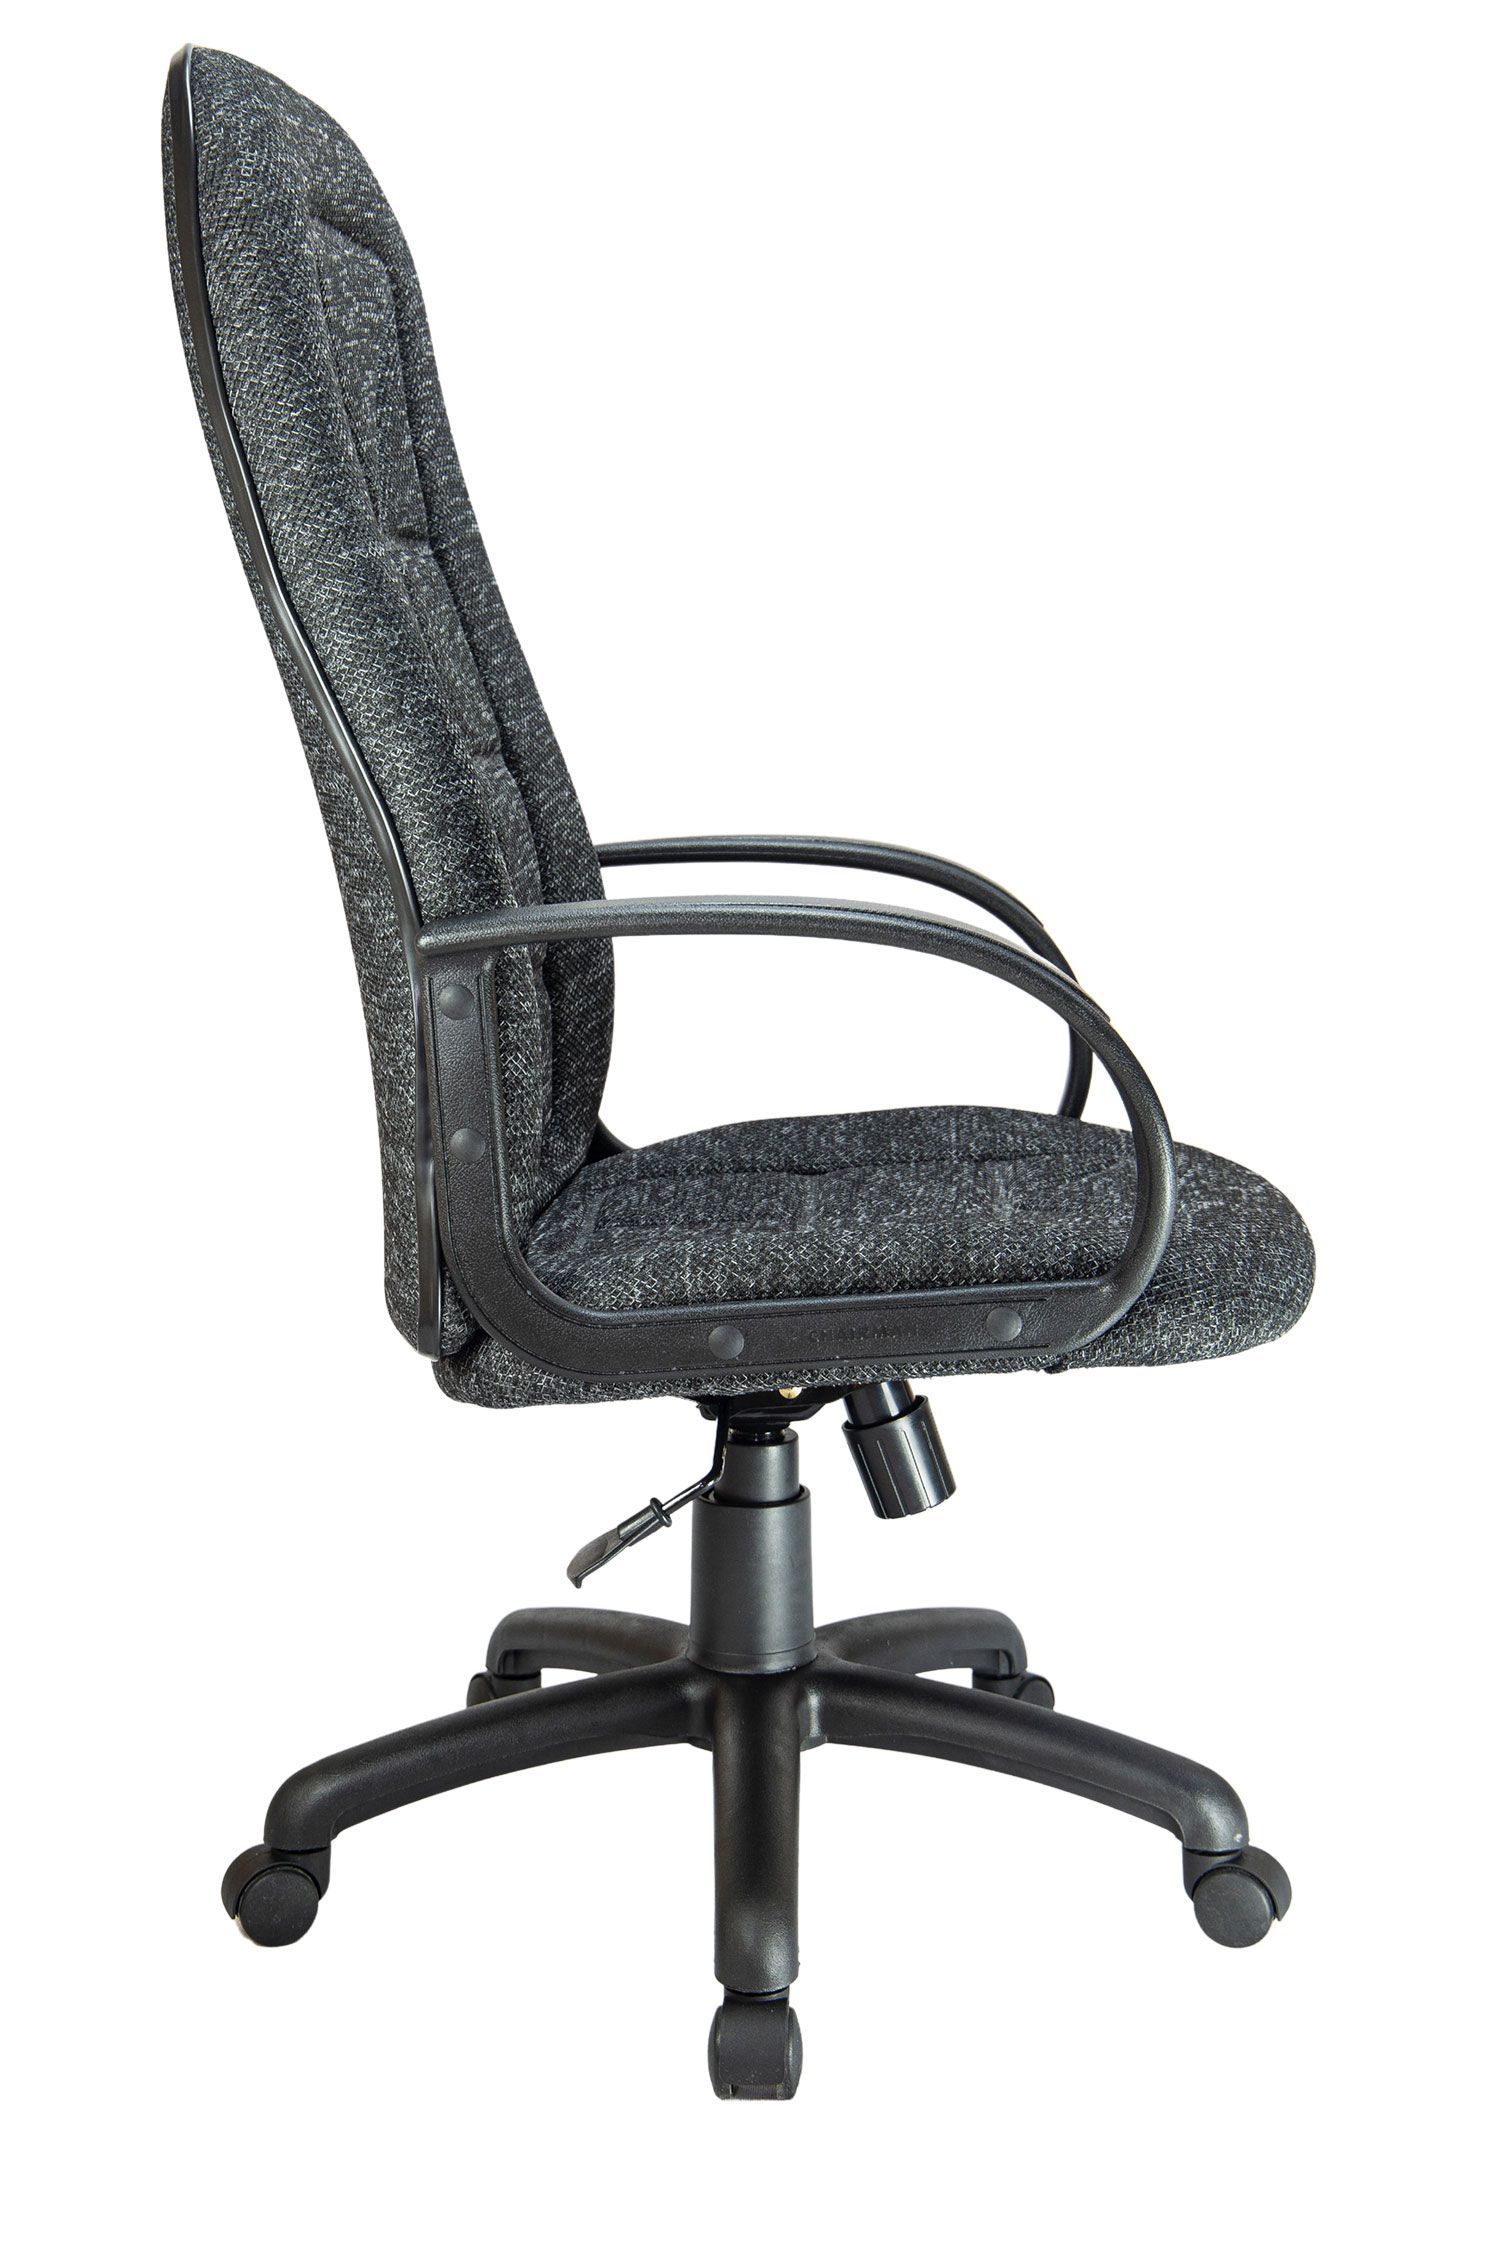 Кресло для персонала Riva Chair RUSSIA 1179-2 SY PL черный